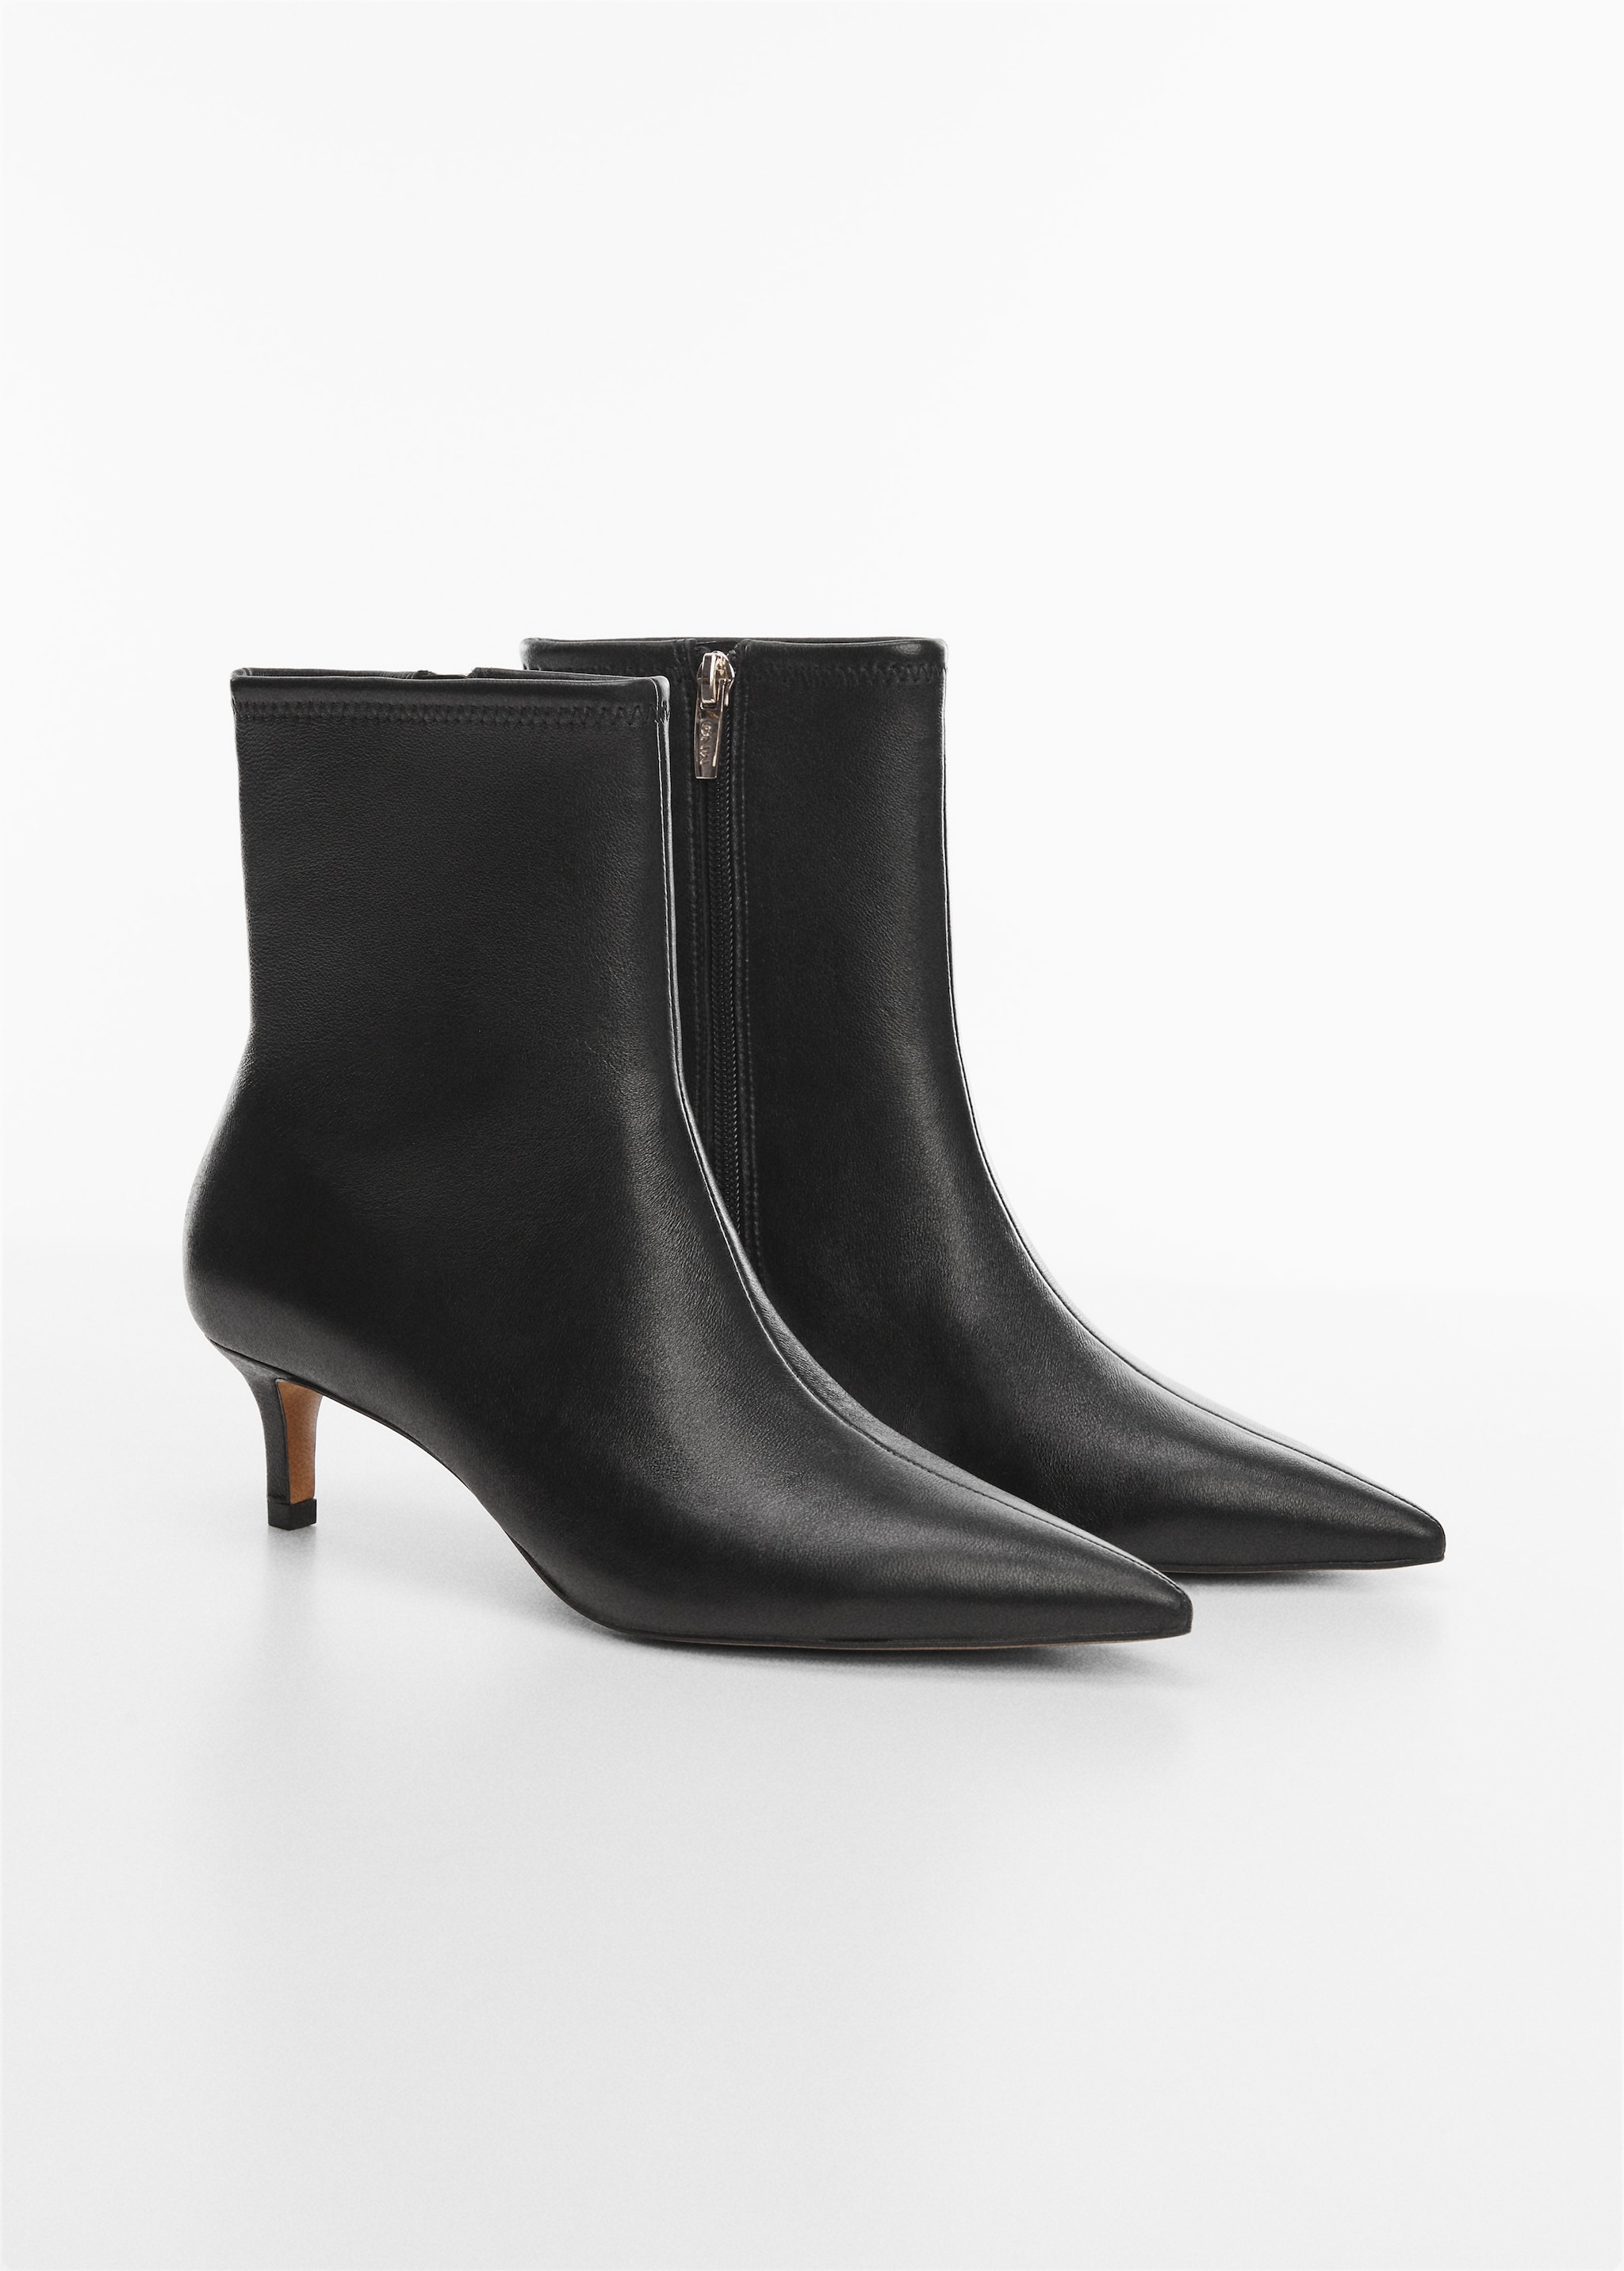 Leather boots with kitten heels  - Medium plane